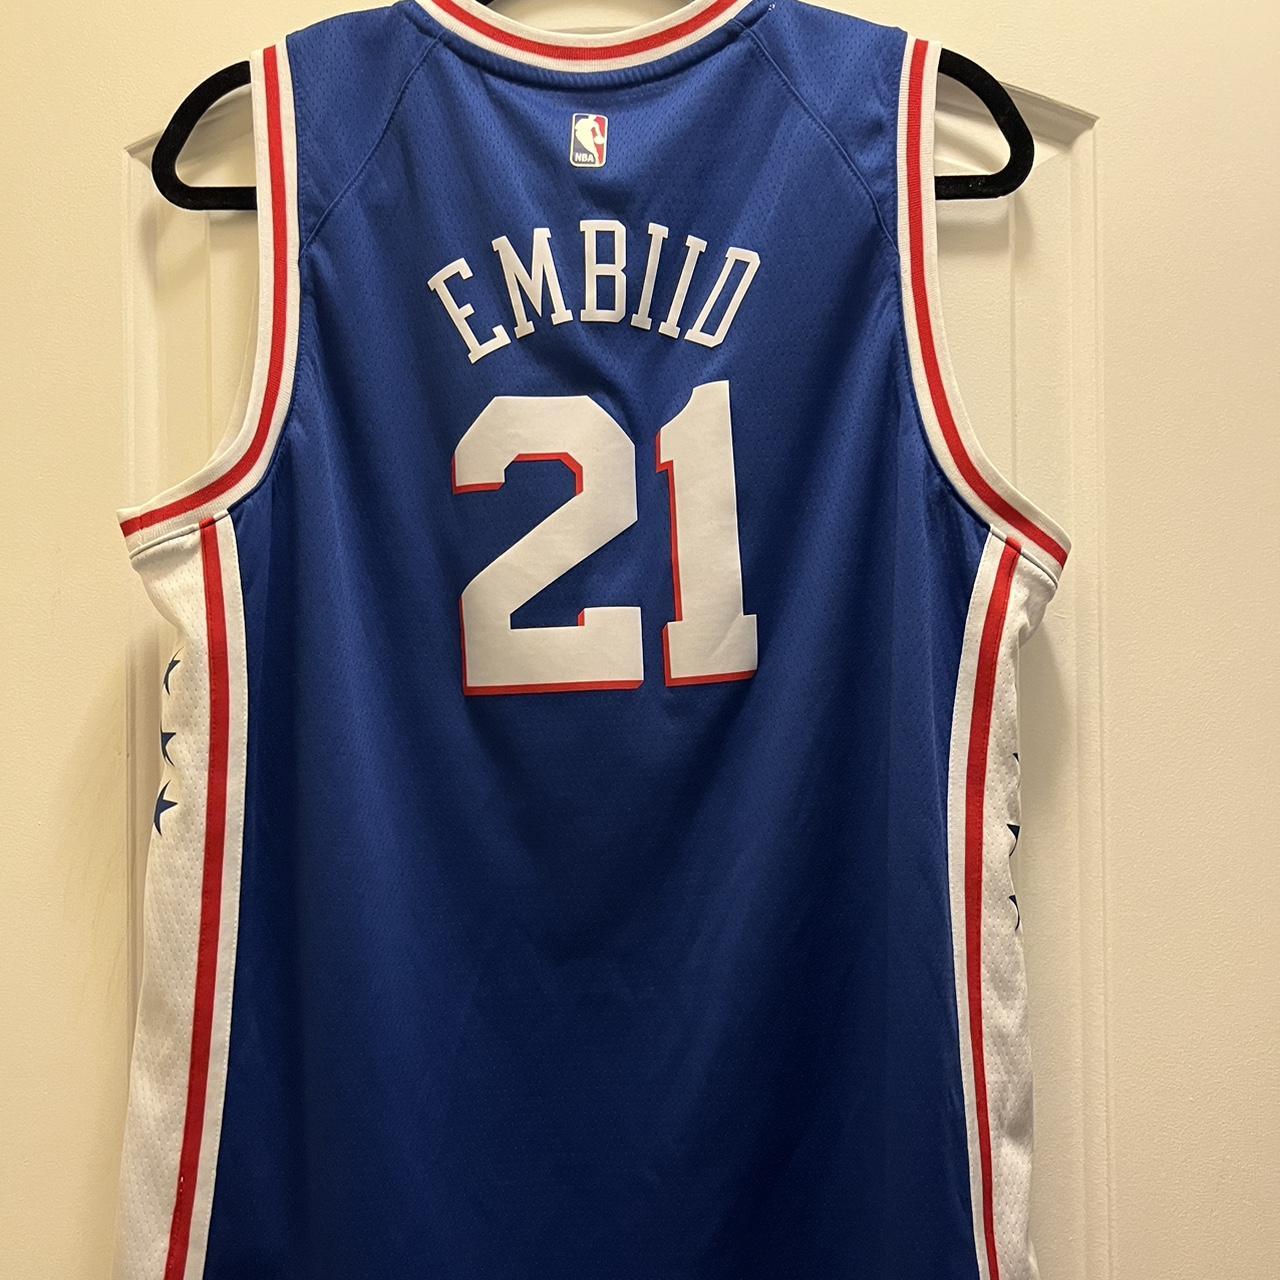 Joel Embiid Philadelphia 76ers Nike Basketball - Depop